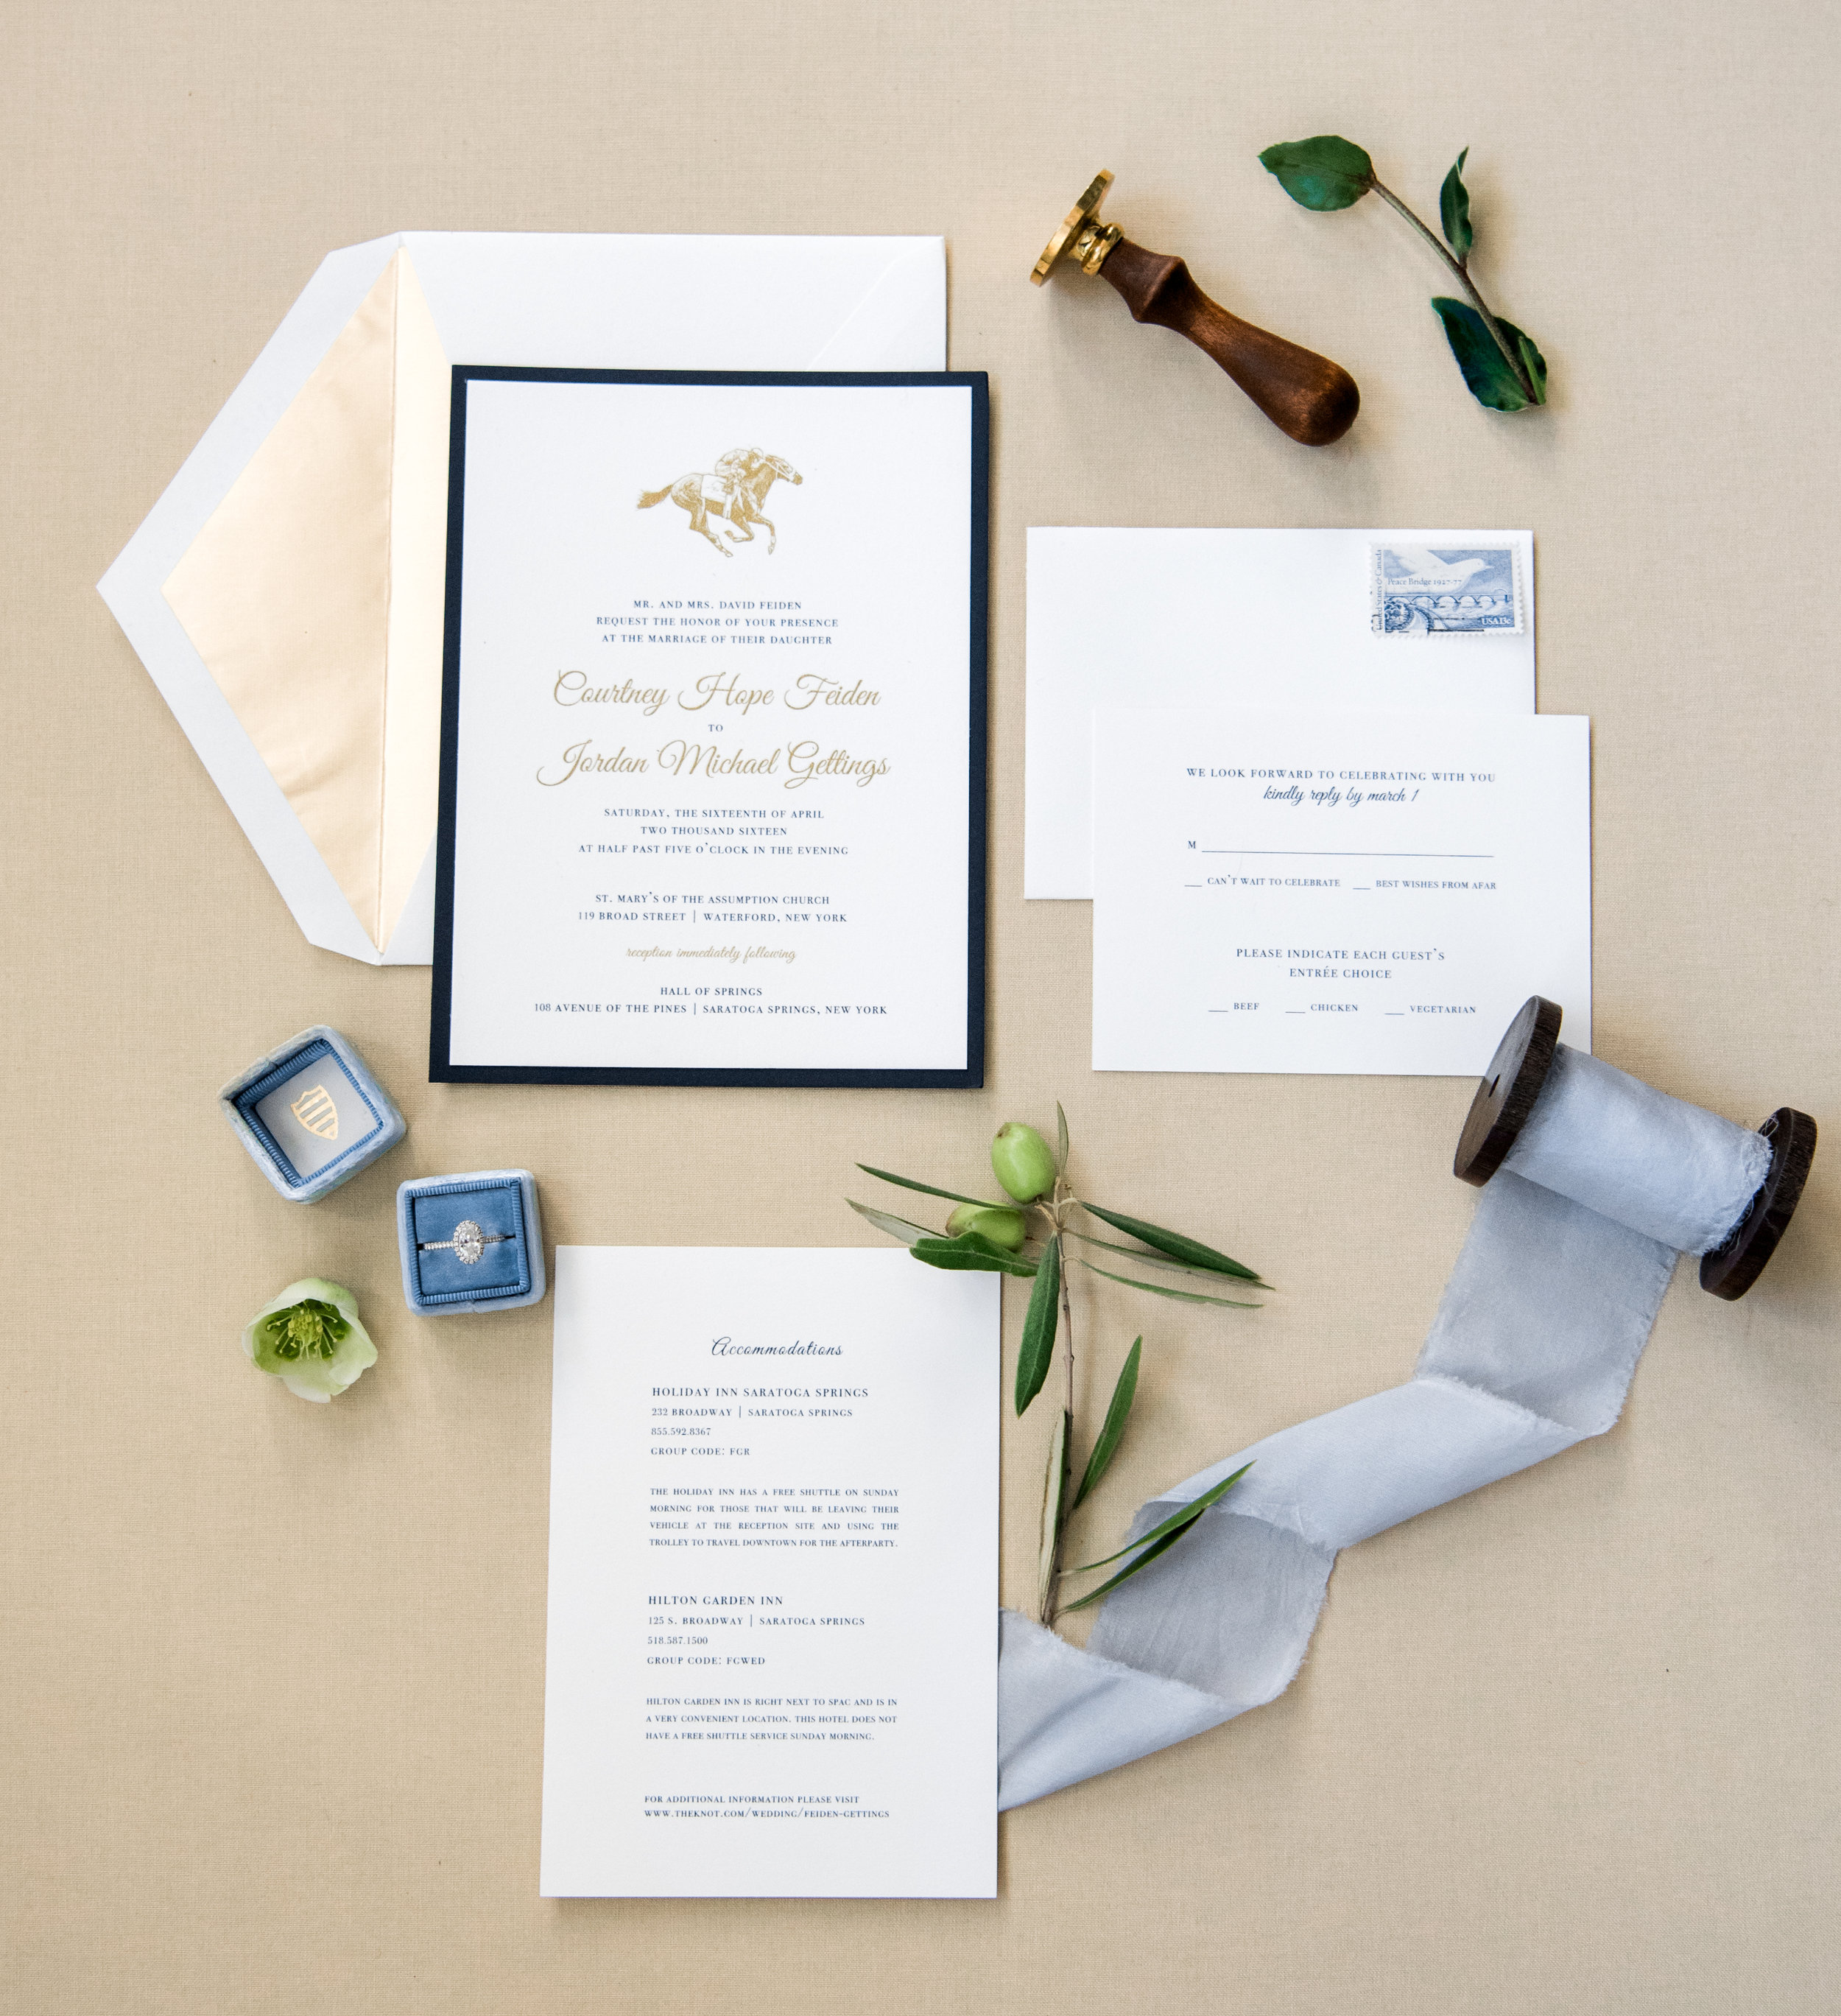  Courtney and Jordan's wedding invitation suite 